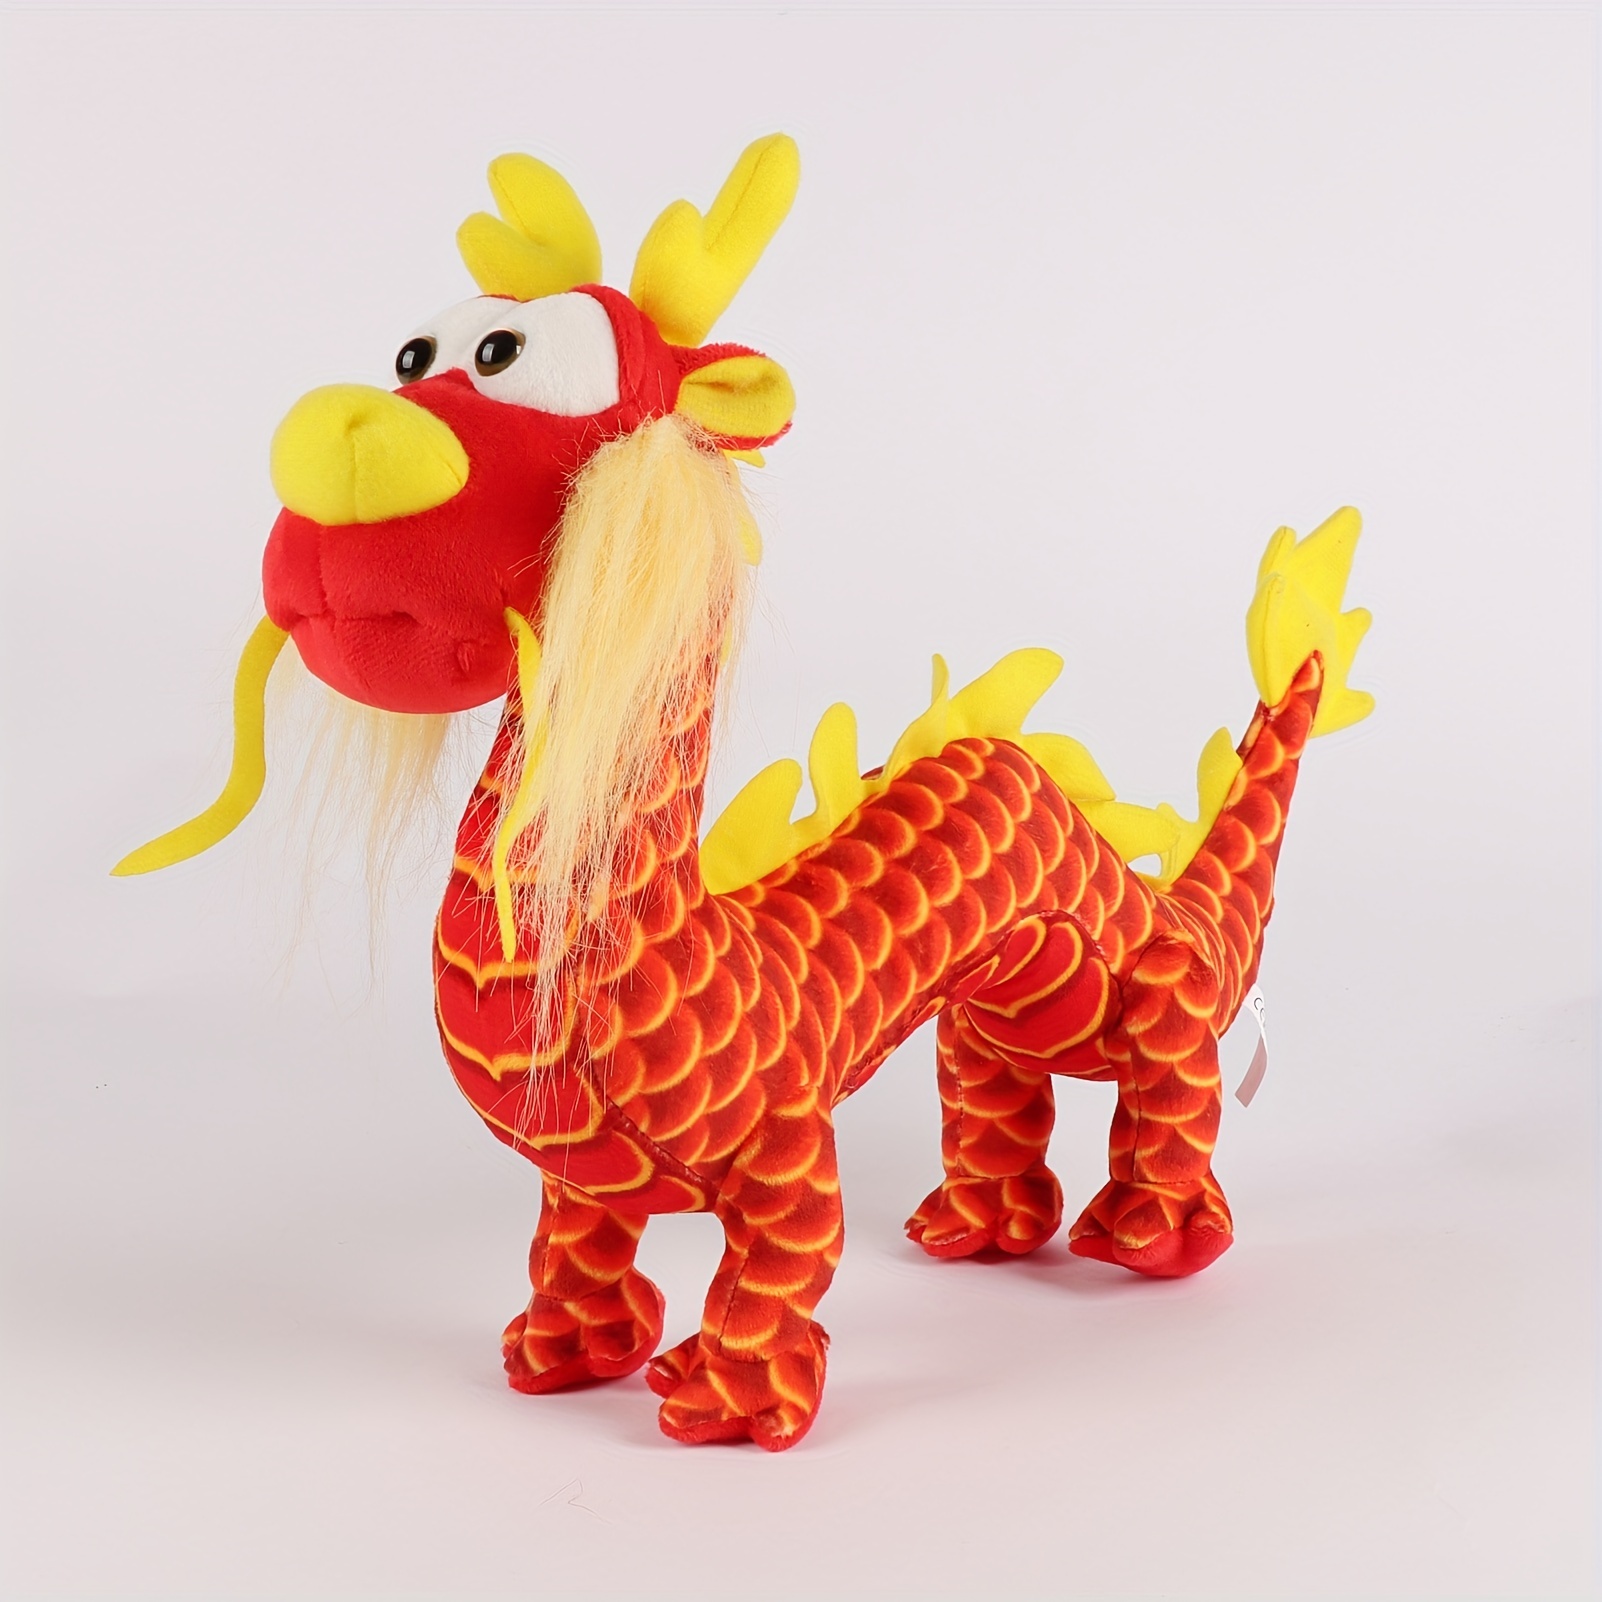 Childrenworld Cartoon Dragon Stuffed Animal Chinese Dragon Plush Doll  Adorable Chinese Dragon Plush Toy Perfect for Gifts Car Decoration